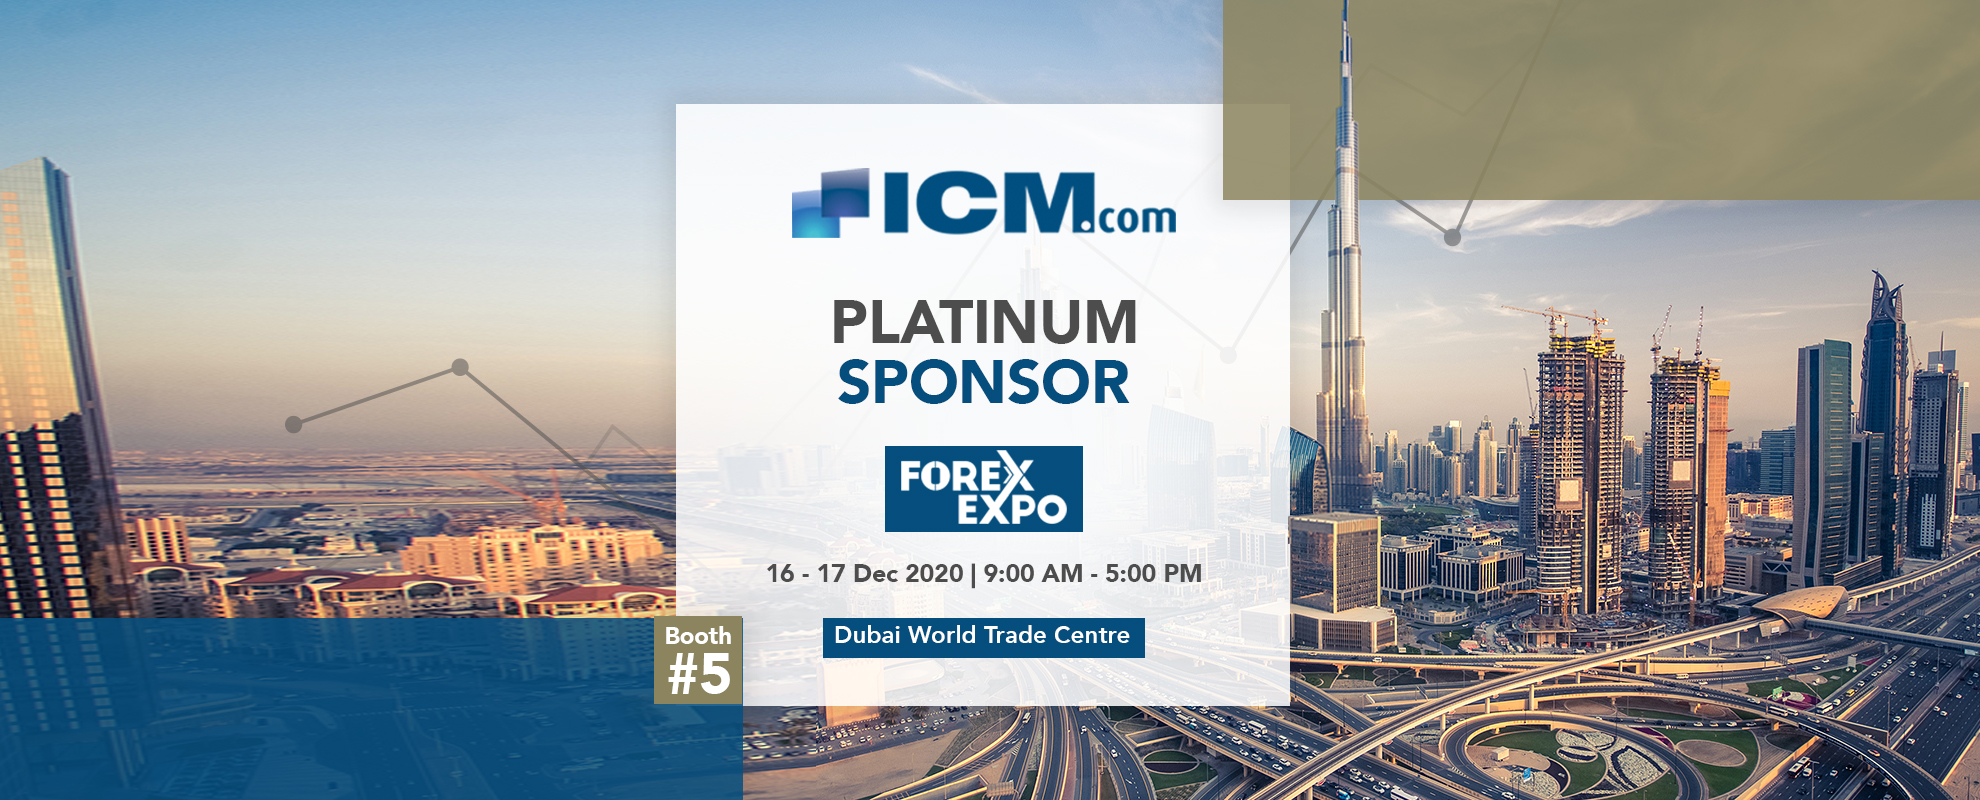 ICM Sponsor The Forex Expo Dubai 2020